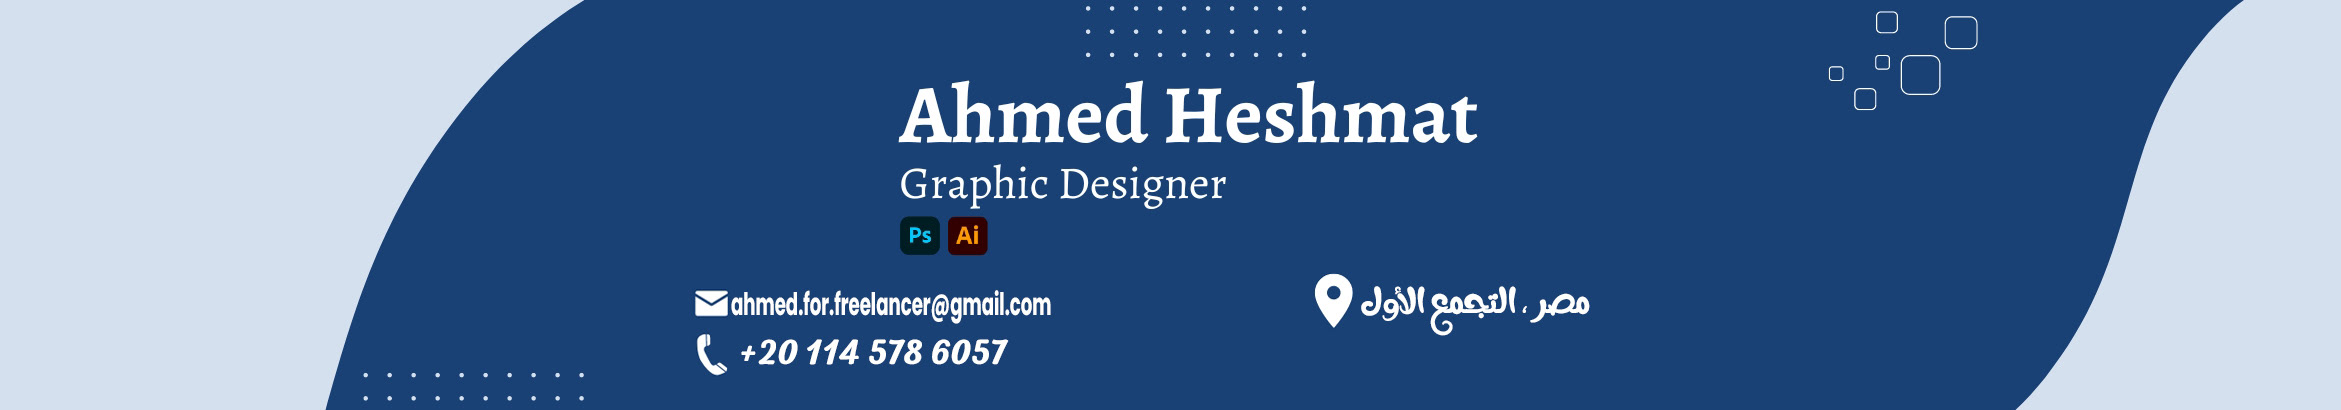 Ahmed Heshmats profilbanner